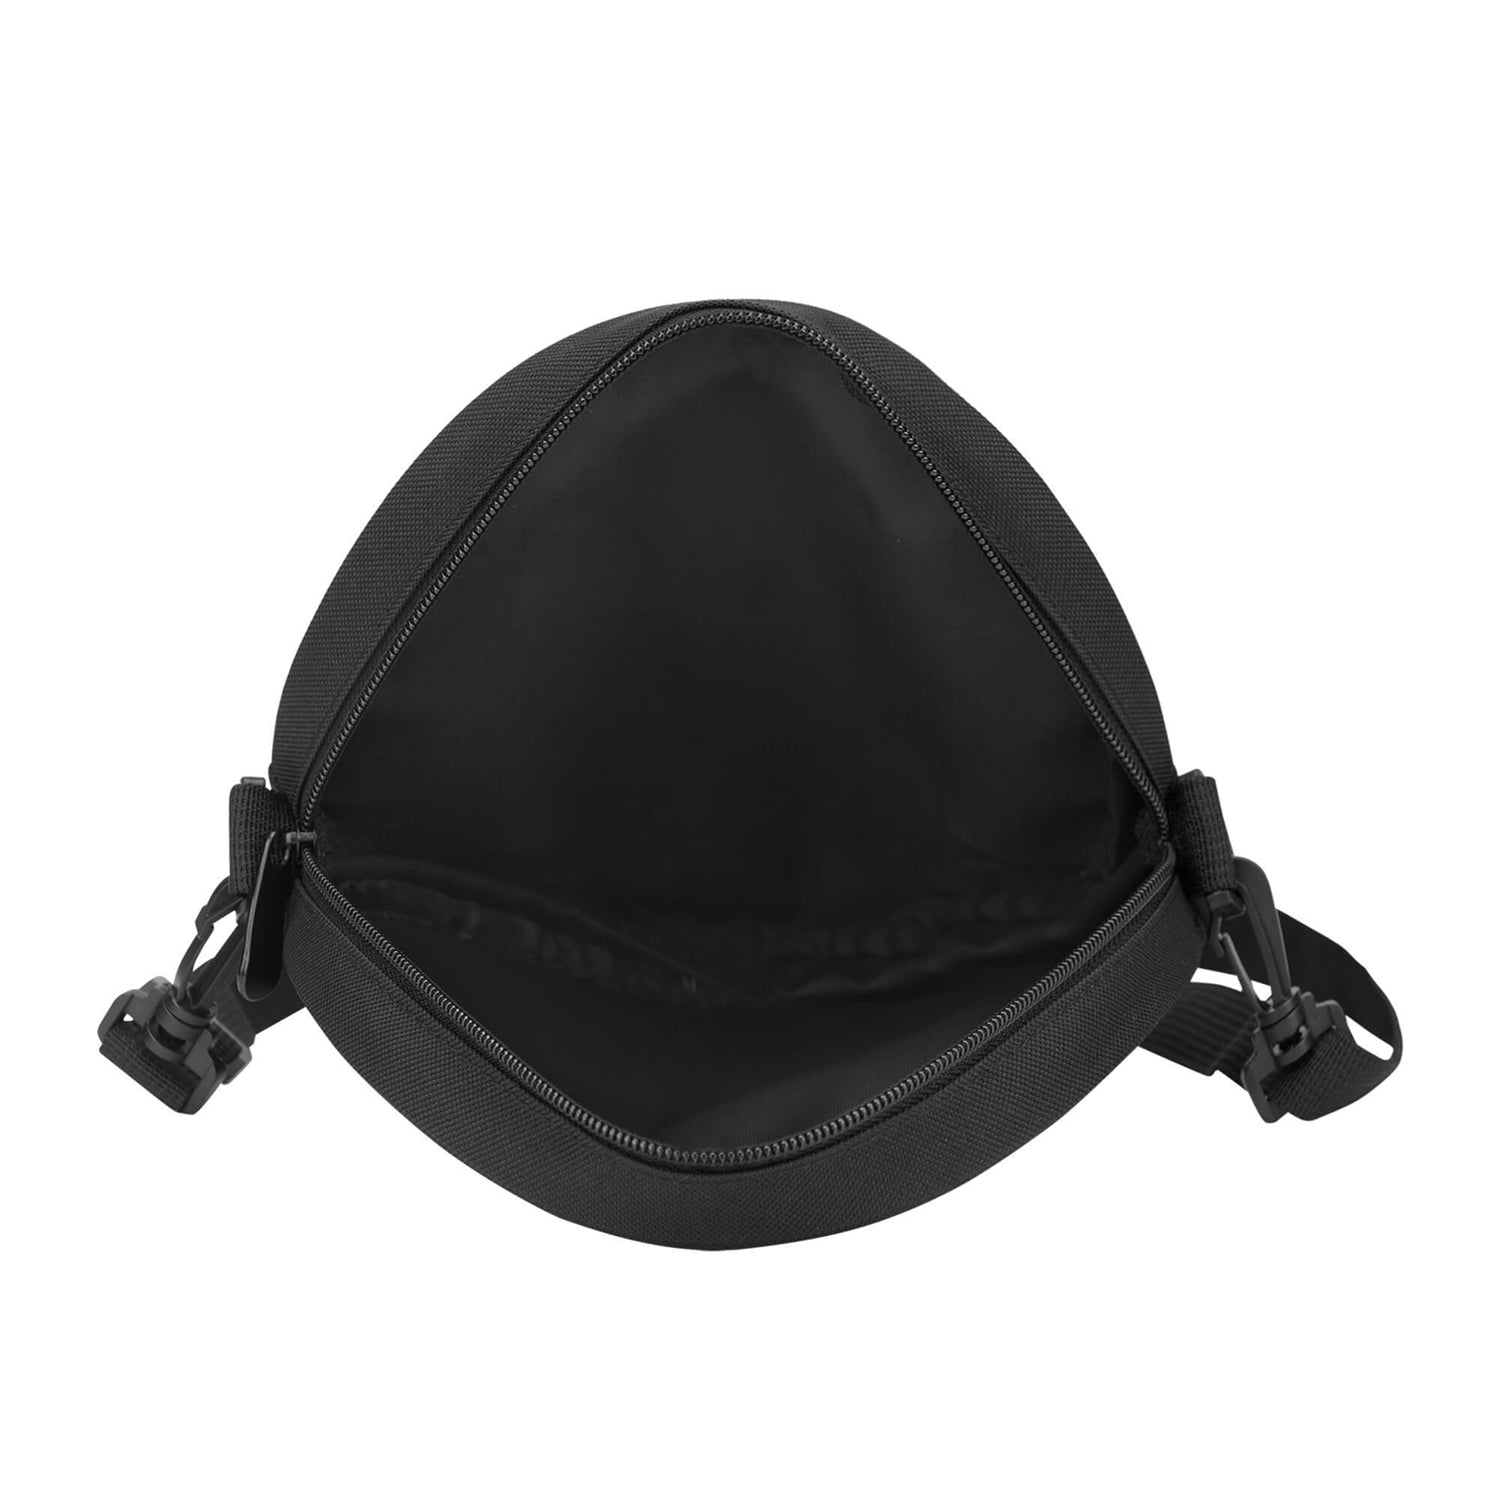 sackett-tartan-round-satchel-bags